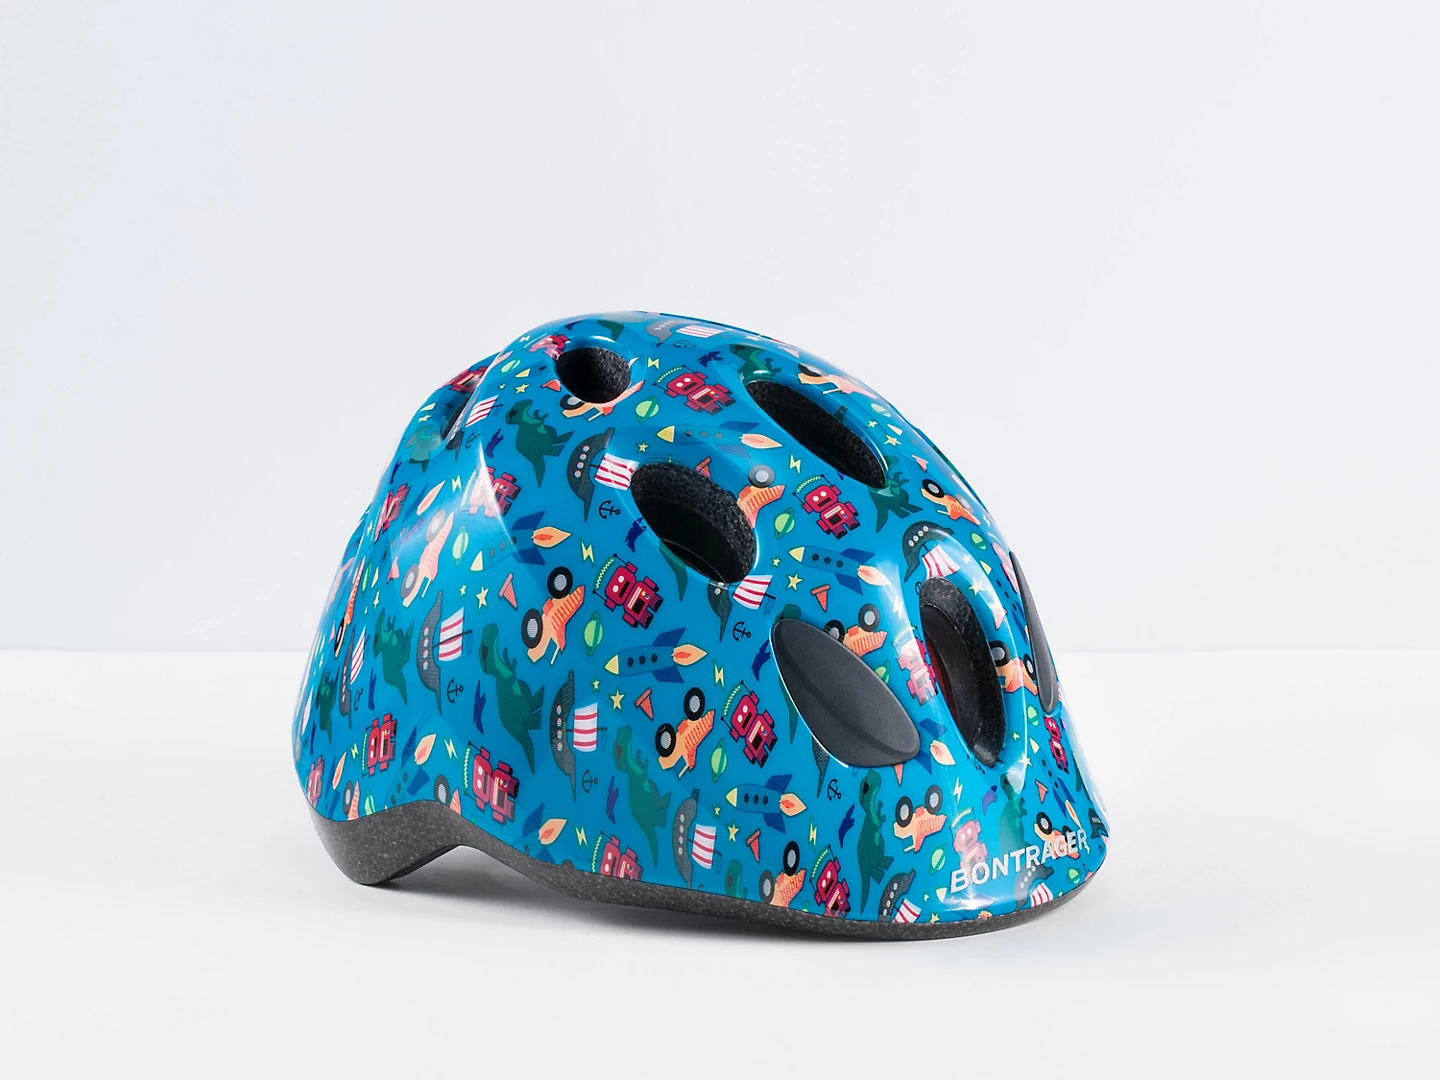 BONTRAGER Little Dipper MIPS Children's Helmet